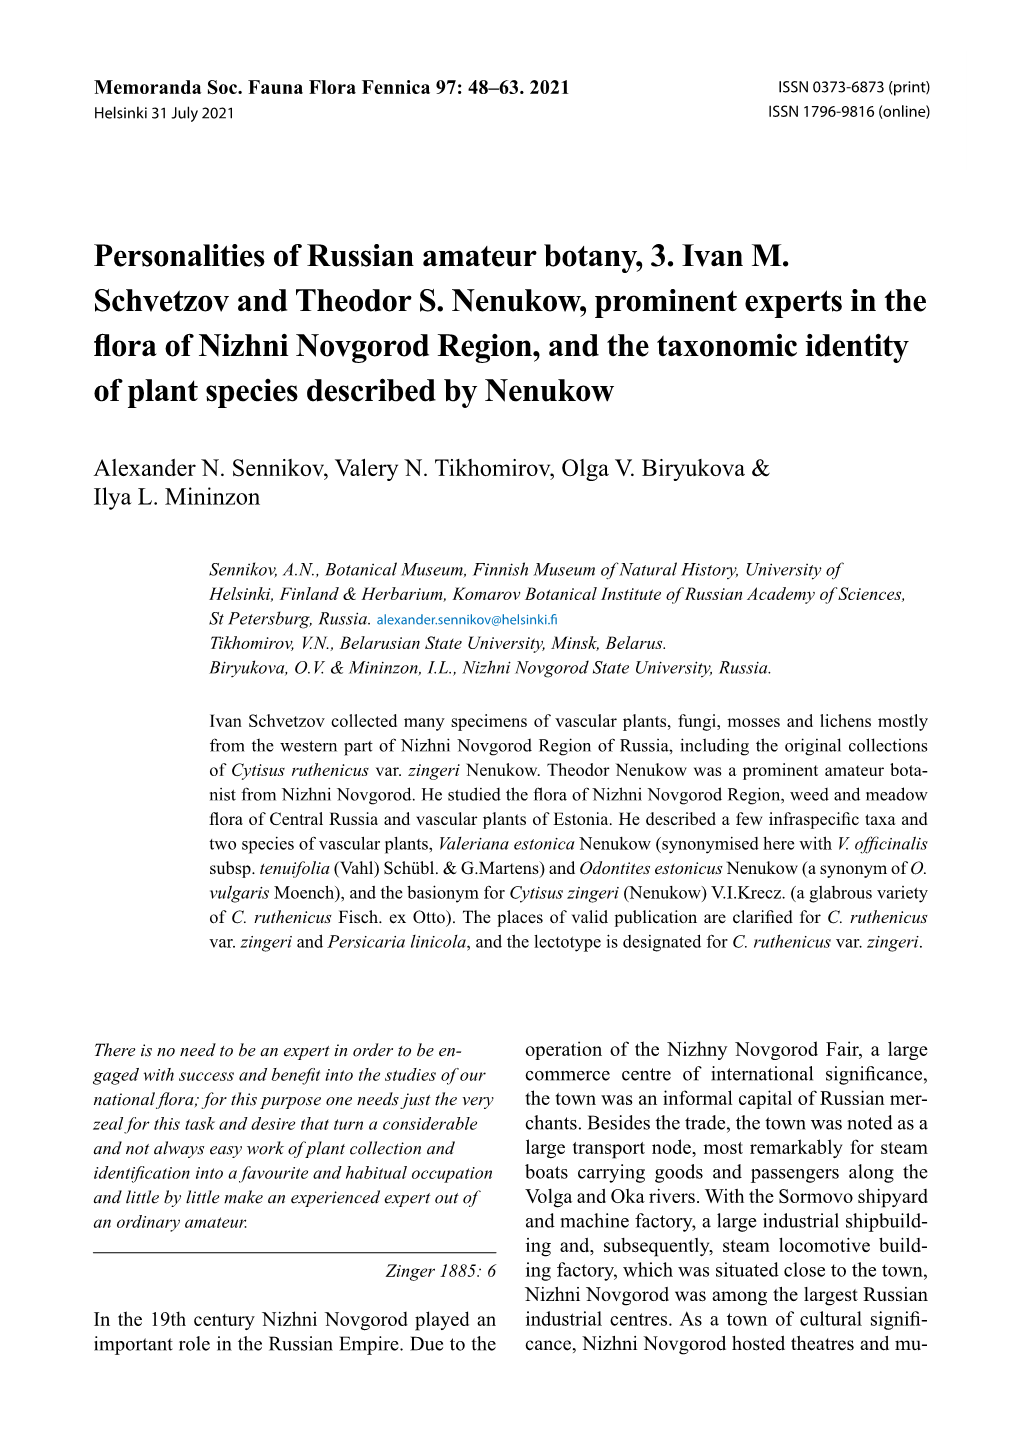 Personalities of Russian Amateur Botany, 3. Ivan M. Schvetzov and Theodor S